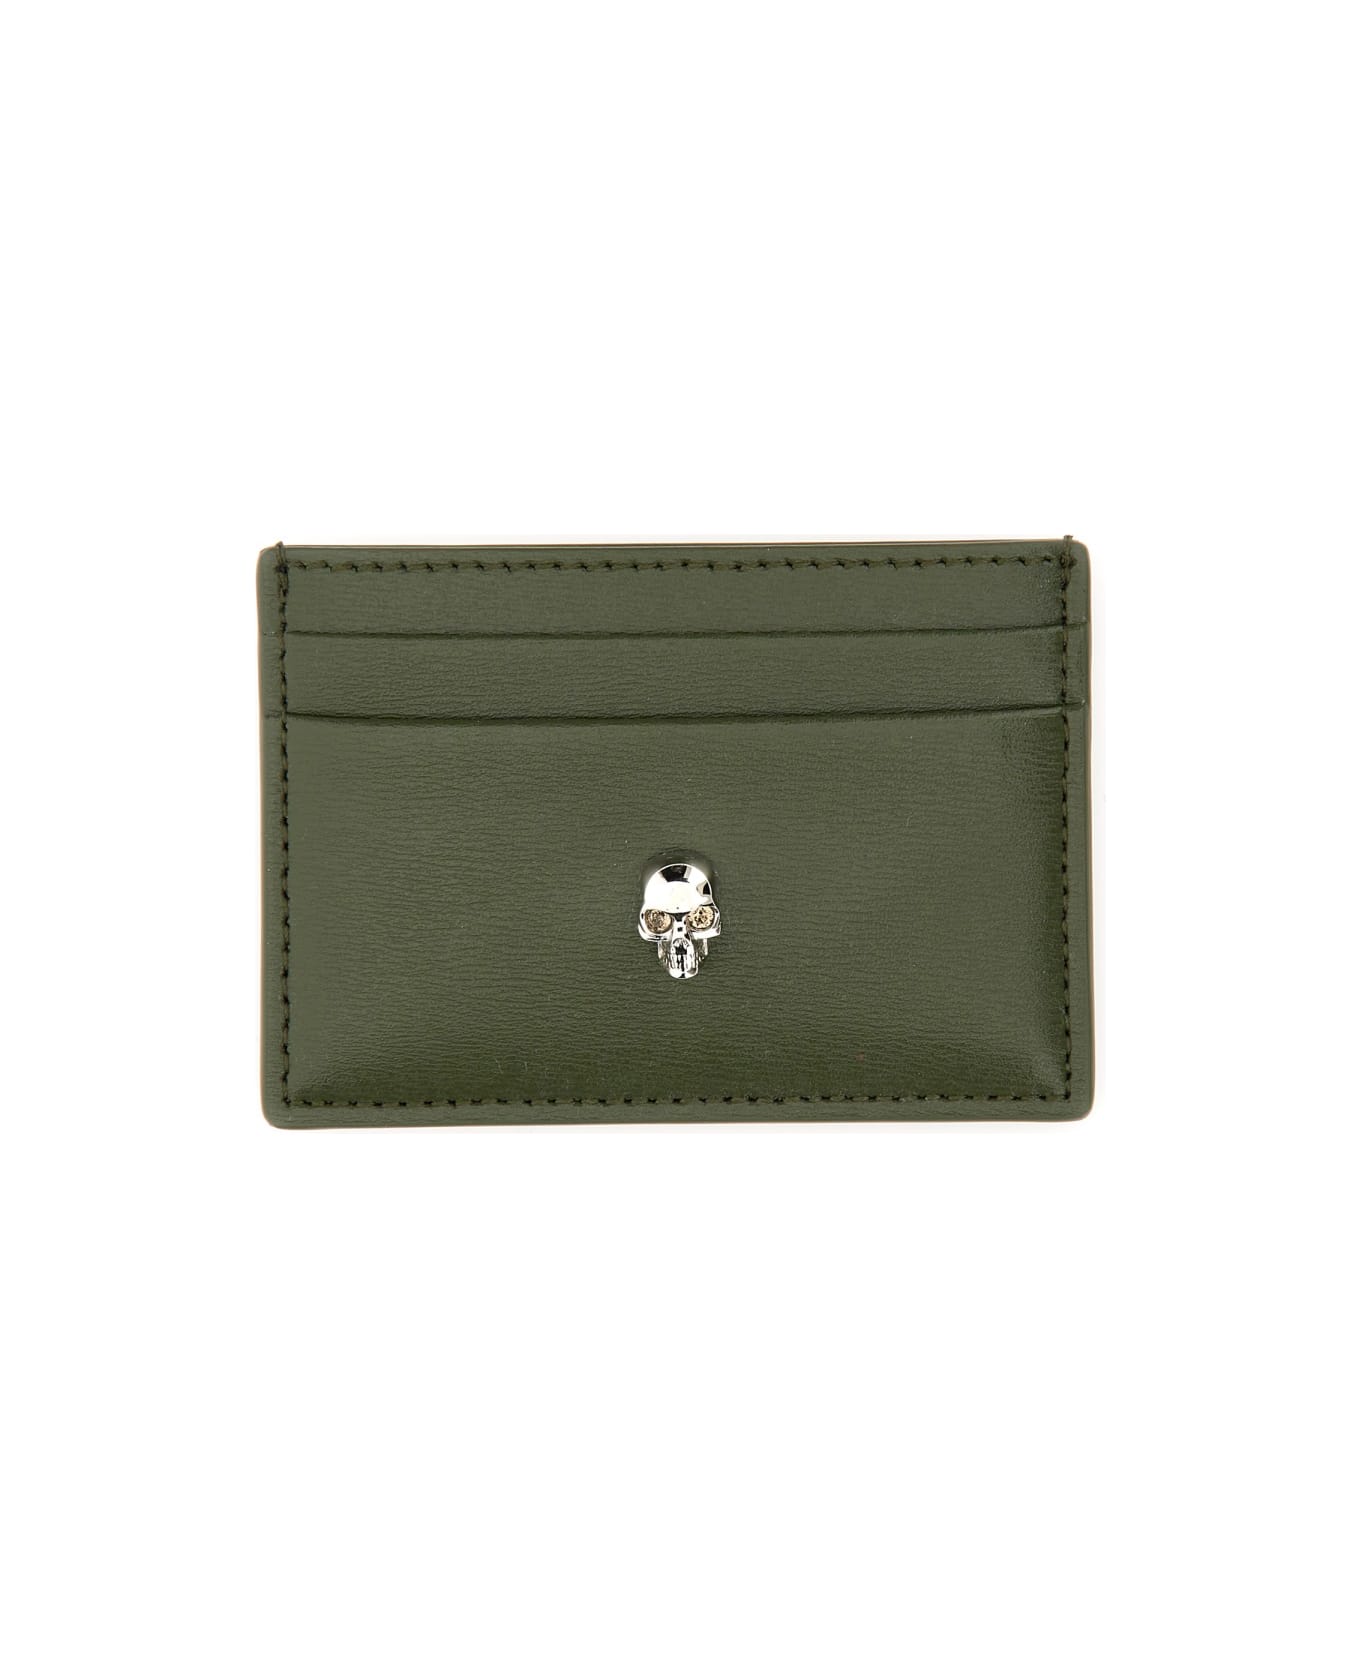 Alexander McQueen Leather Card Holder - GREEN